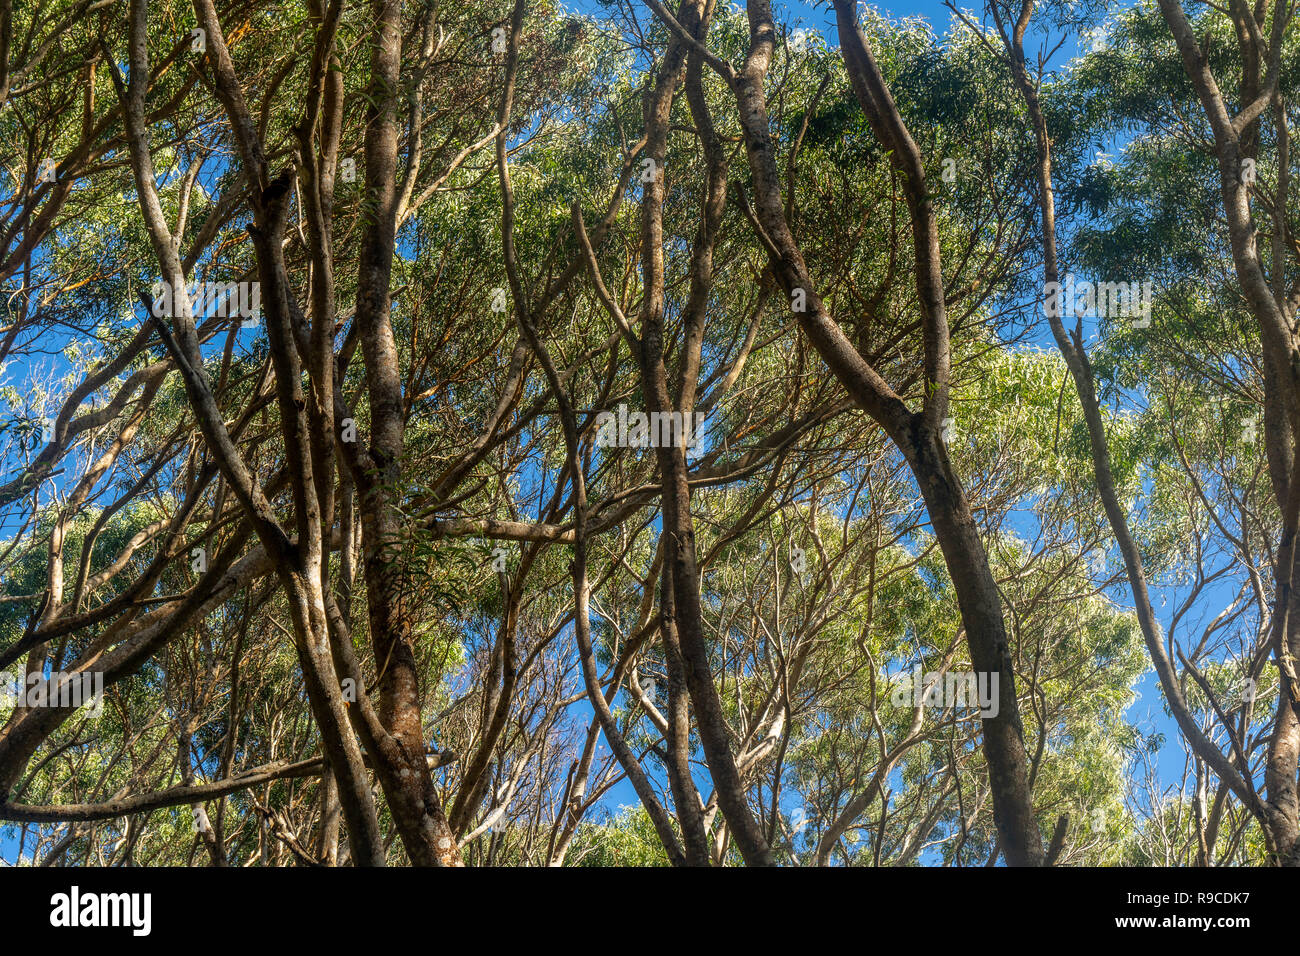 Koa tree towering overhead creating a cool shady environment. Kokee State Park, Kauai, Hawaii Stock Photo